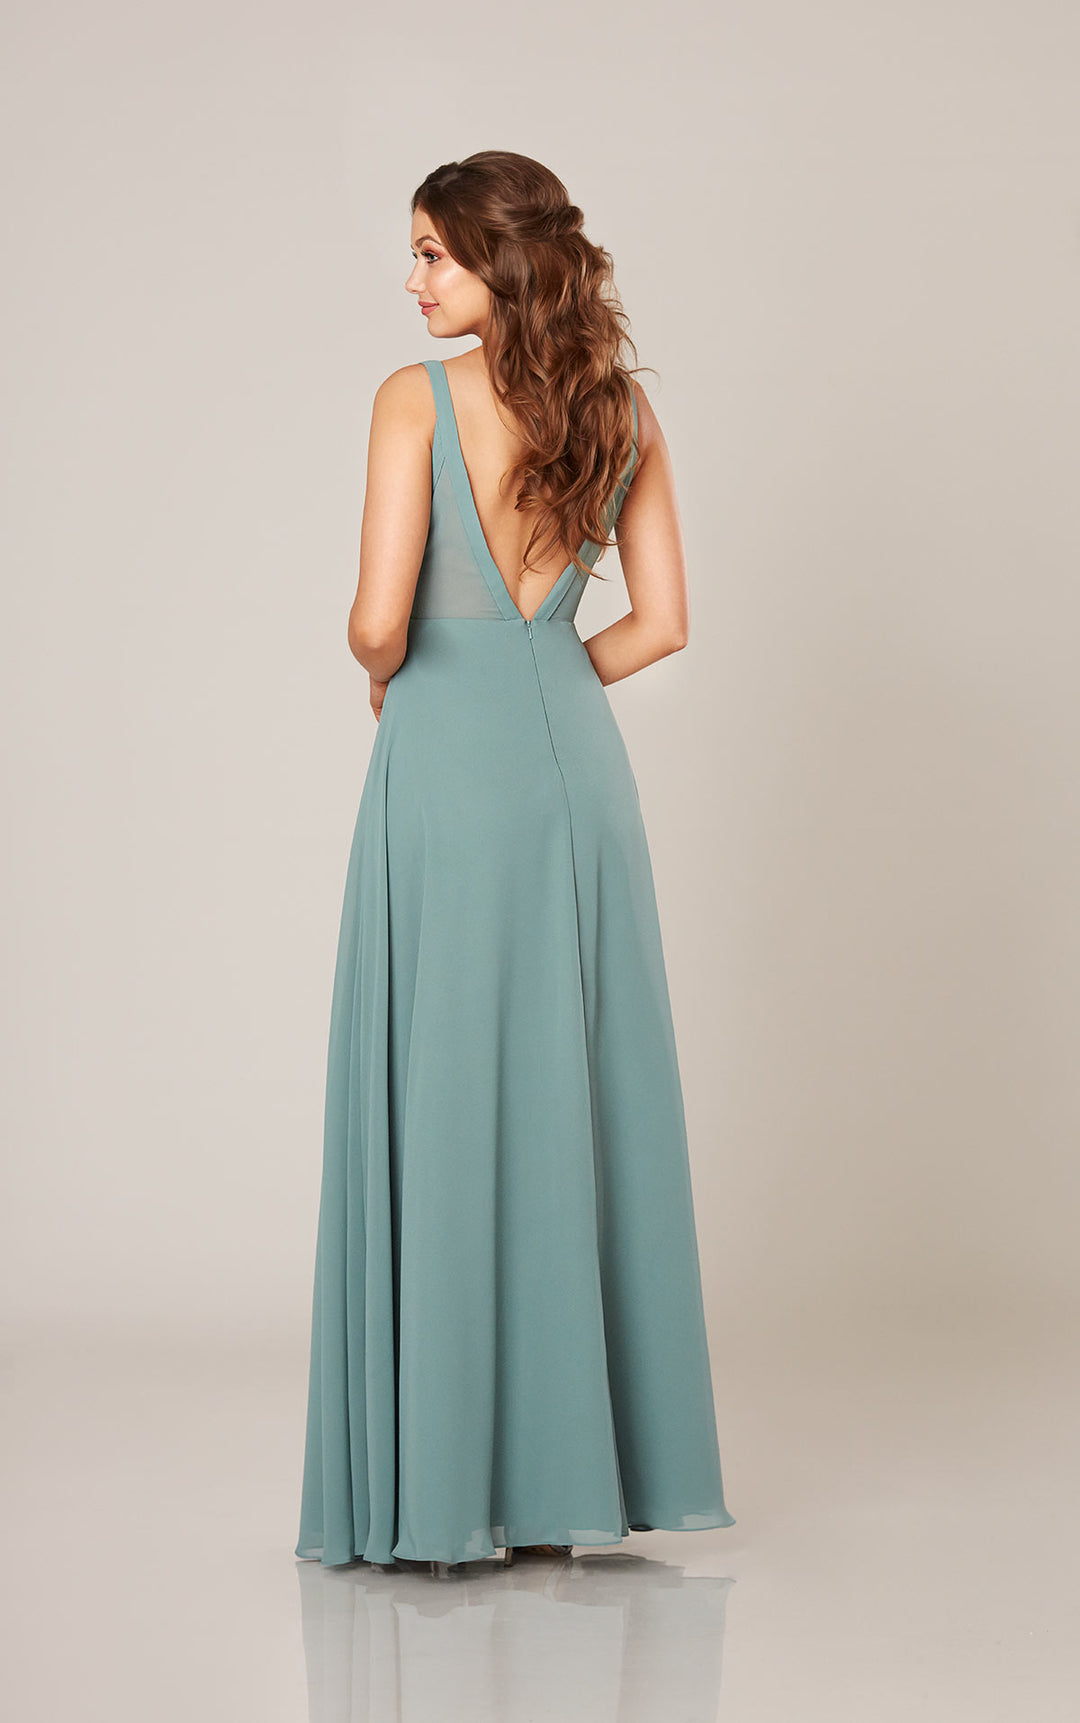 Formal Flowy Dress by Sorella Vita Style 9320 Size 10